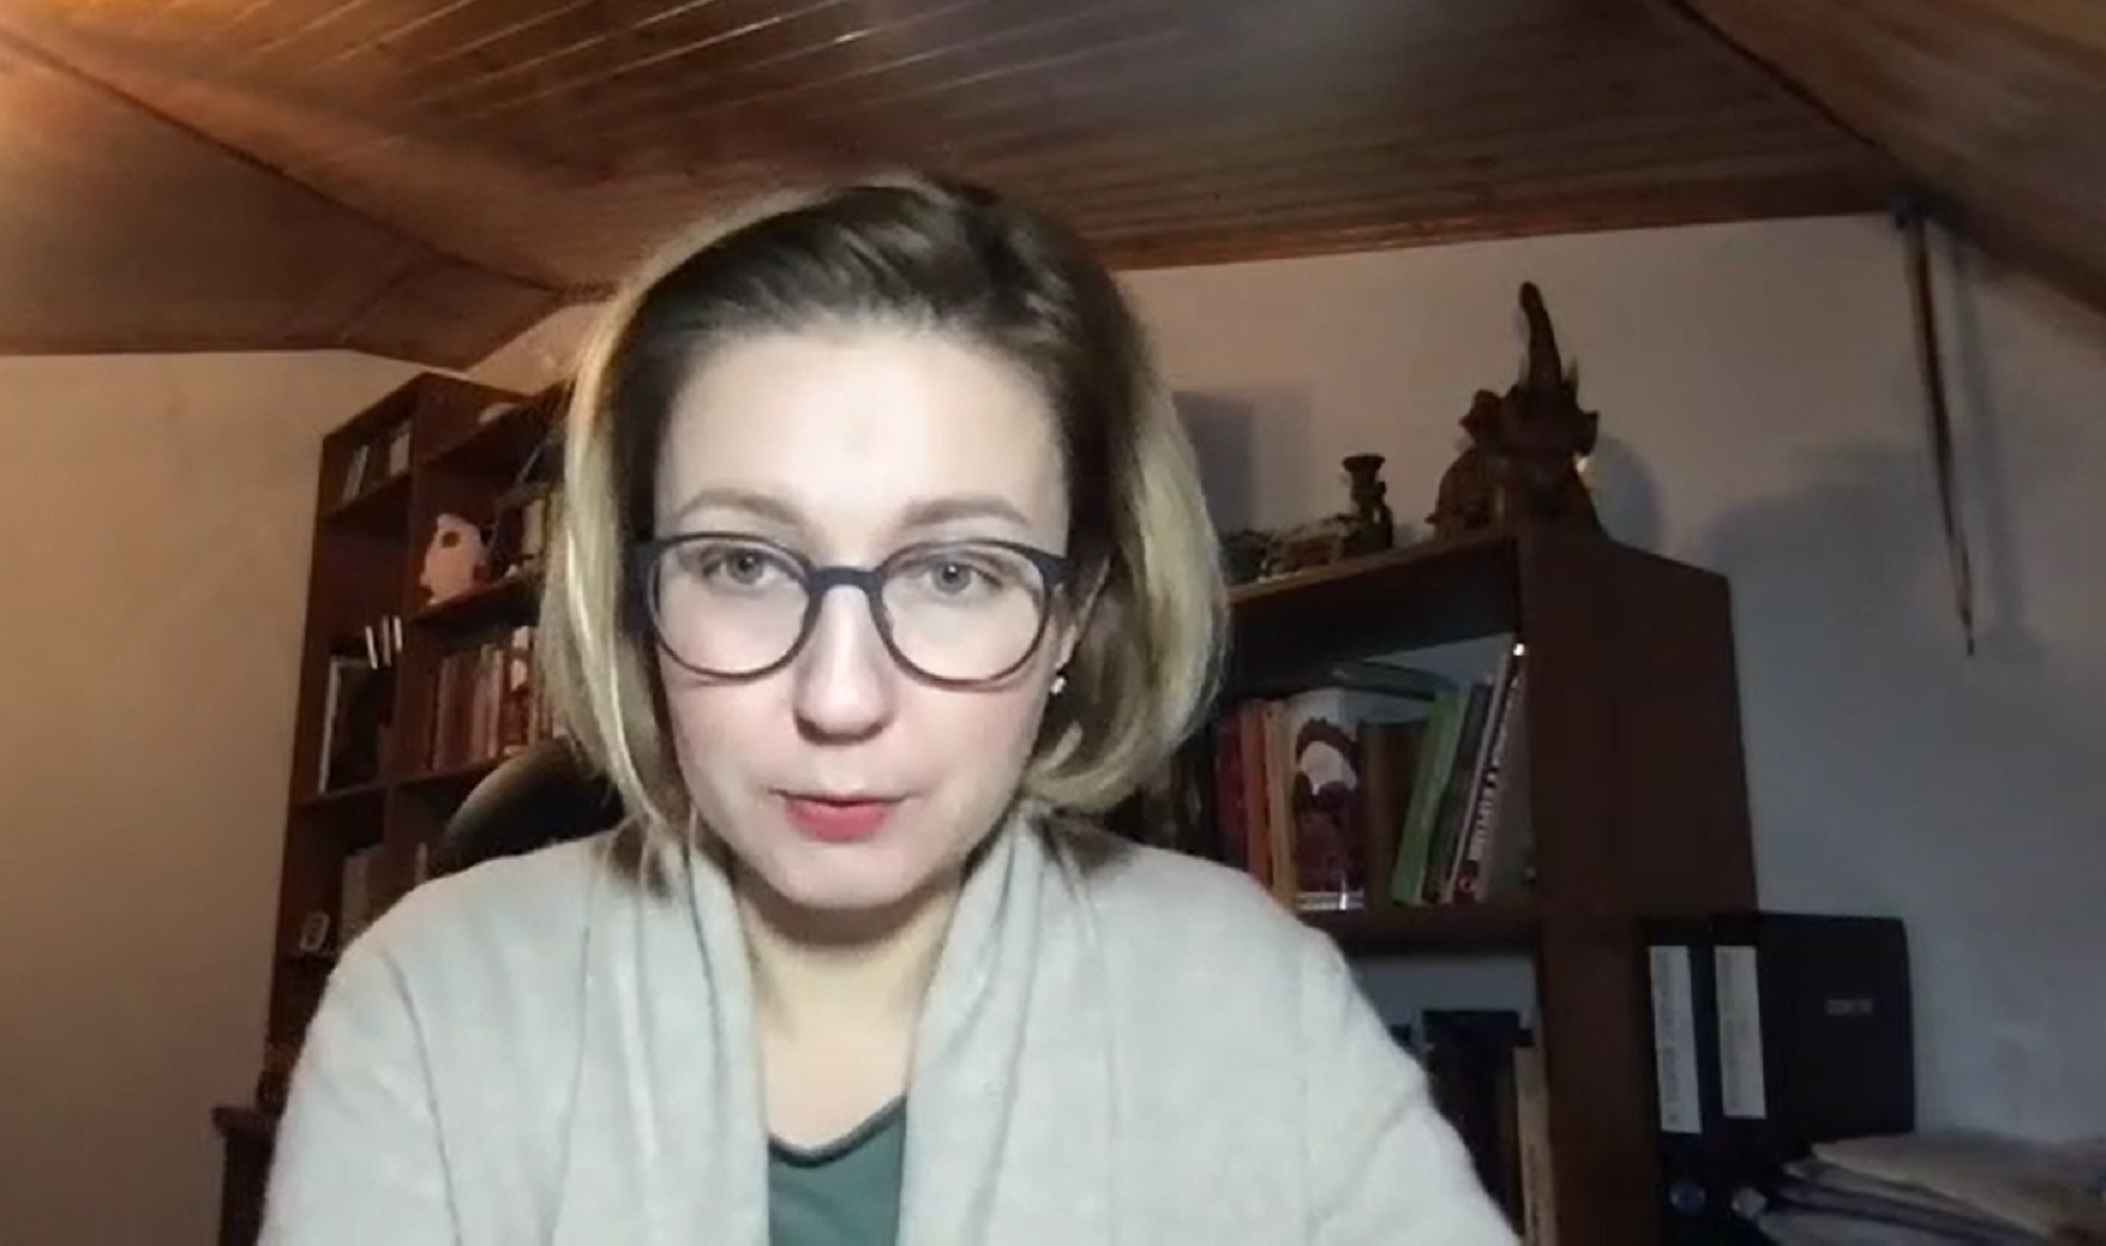 Inna Sovsun, an MP in Ukraine, has urged the west to help Ukraine protect itself